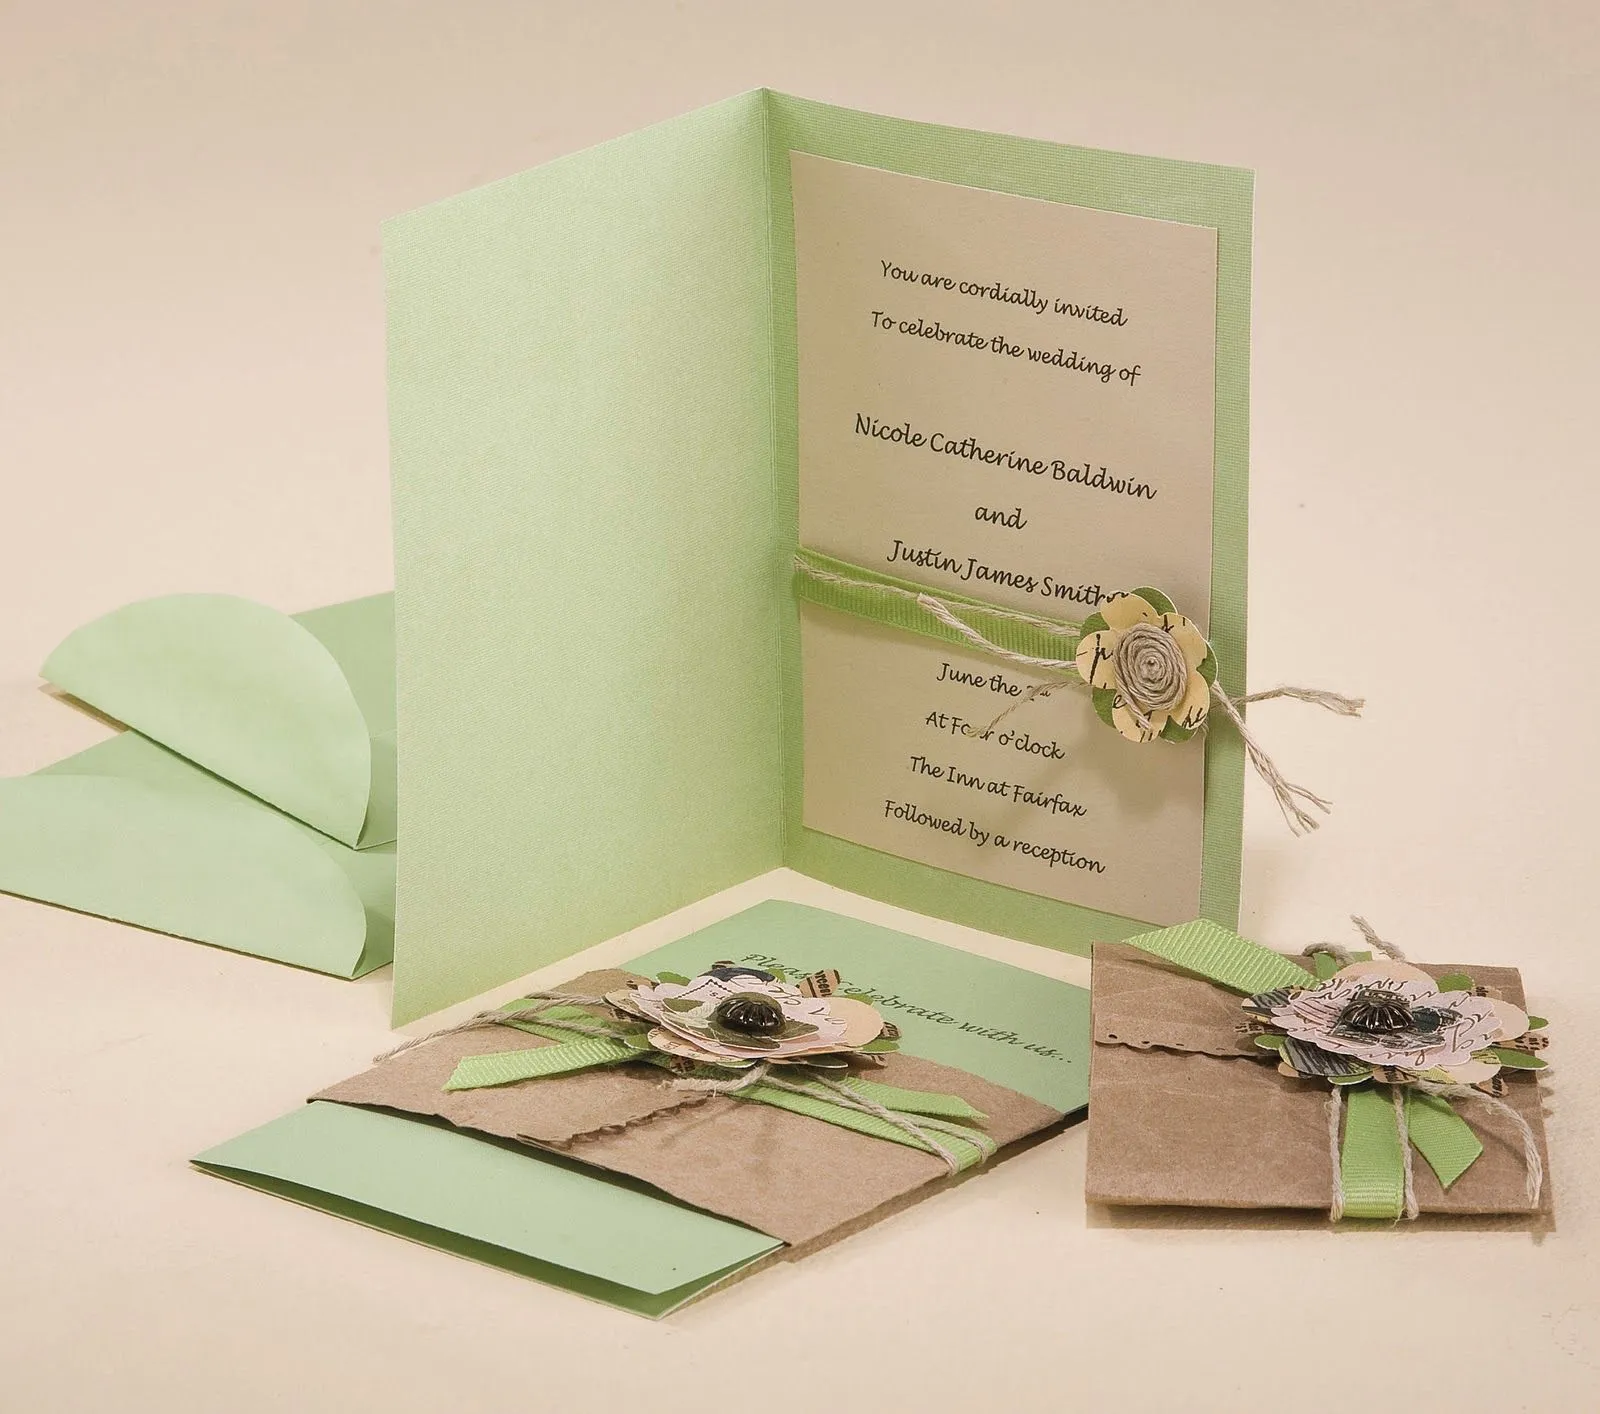 diseño de tarjetas para bodas gratis - Buscar con Google | Mi boda ...